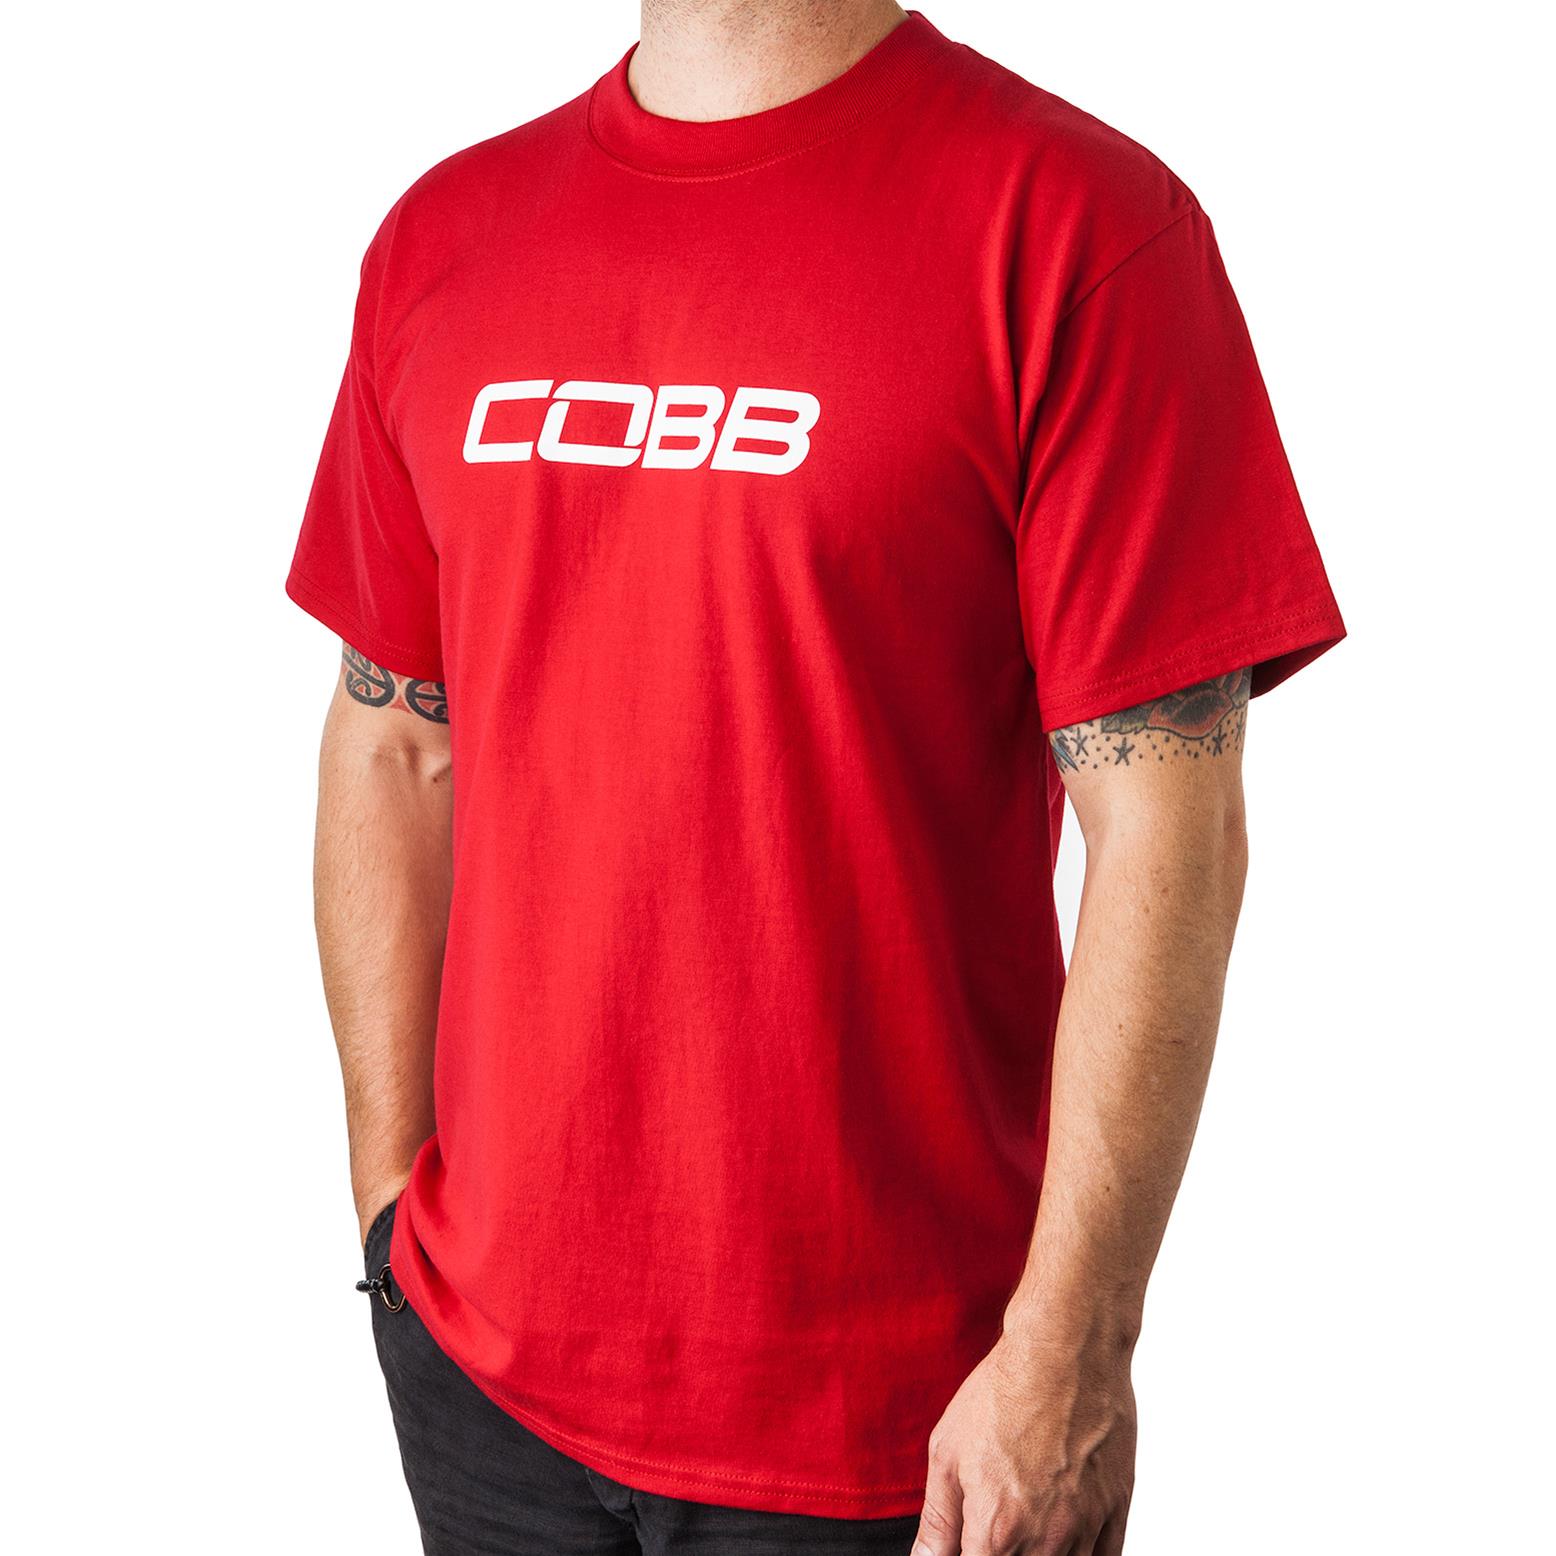 Cobb Tuning Products CO-REDCOBB-XL COBB Tuning T-Shirts | Summit Racing